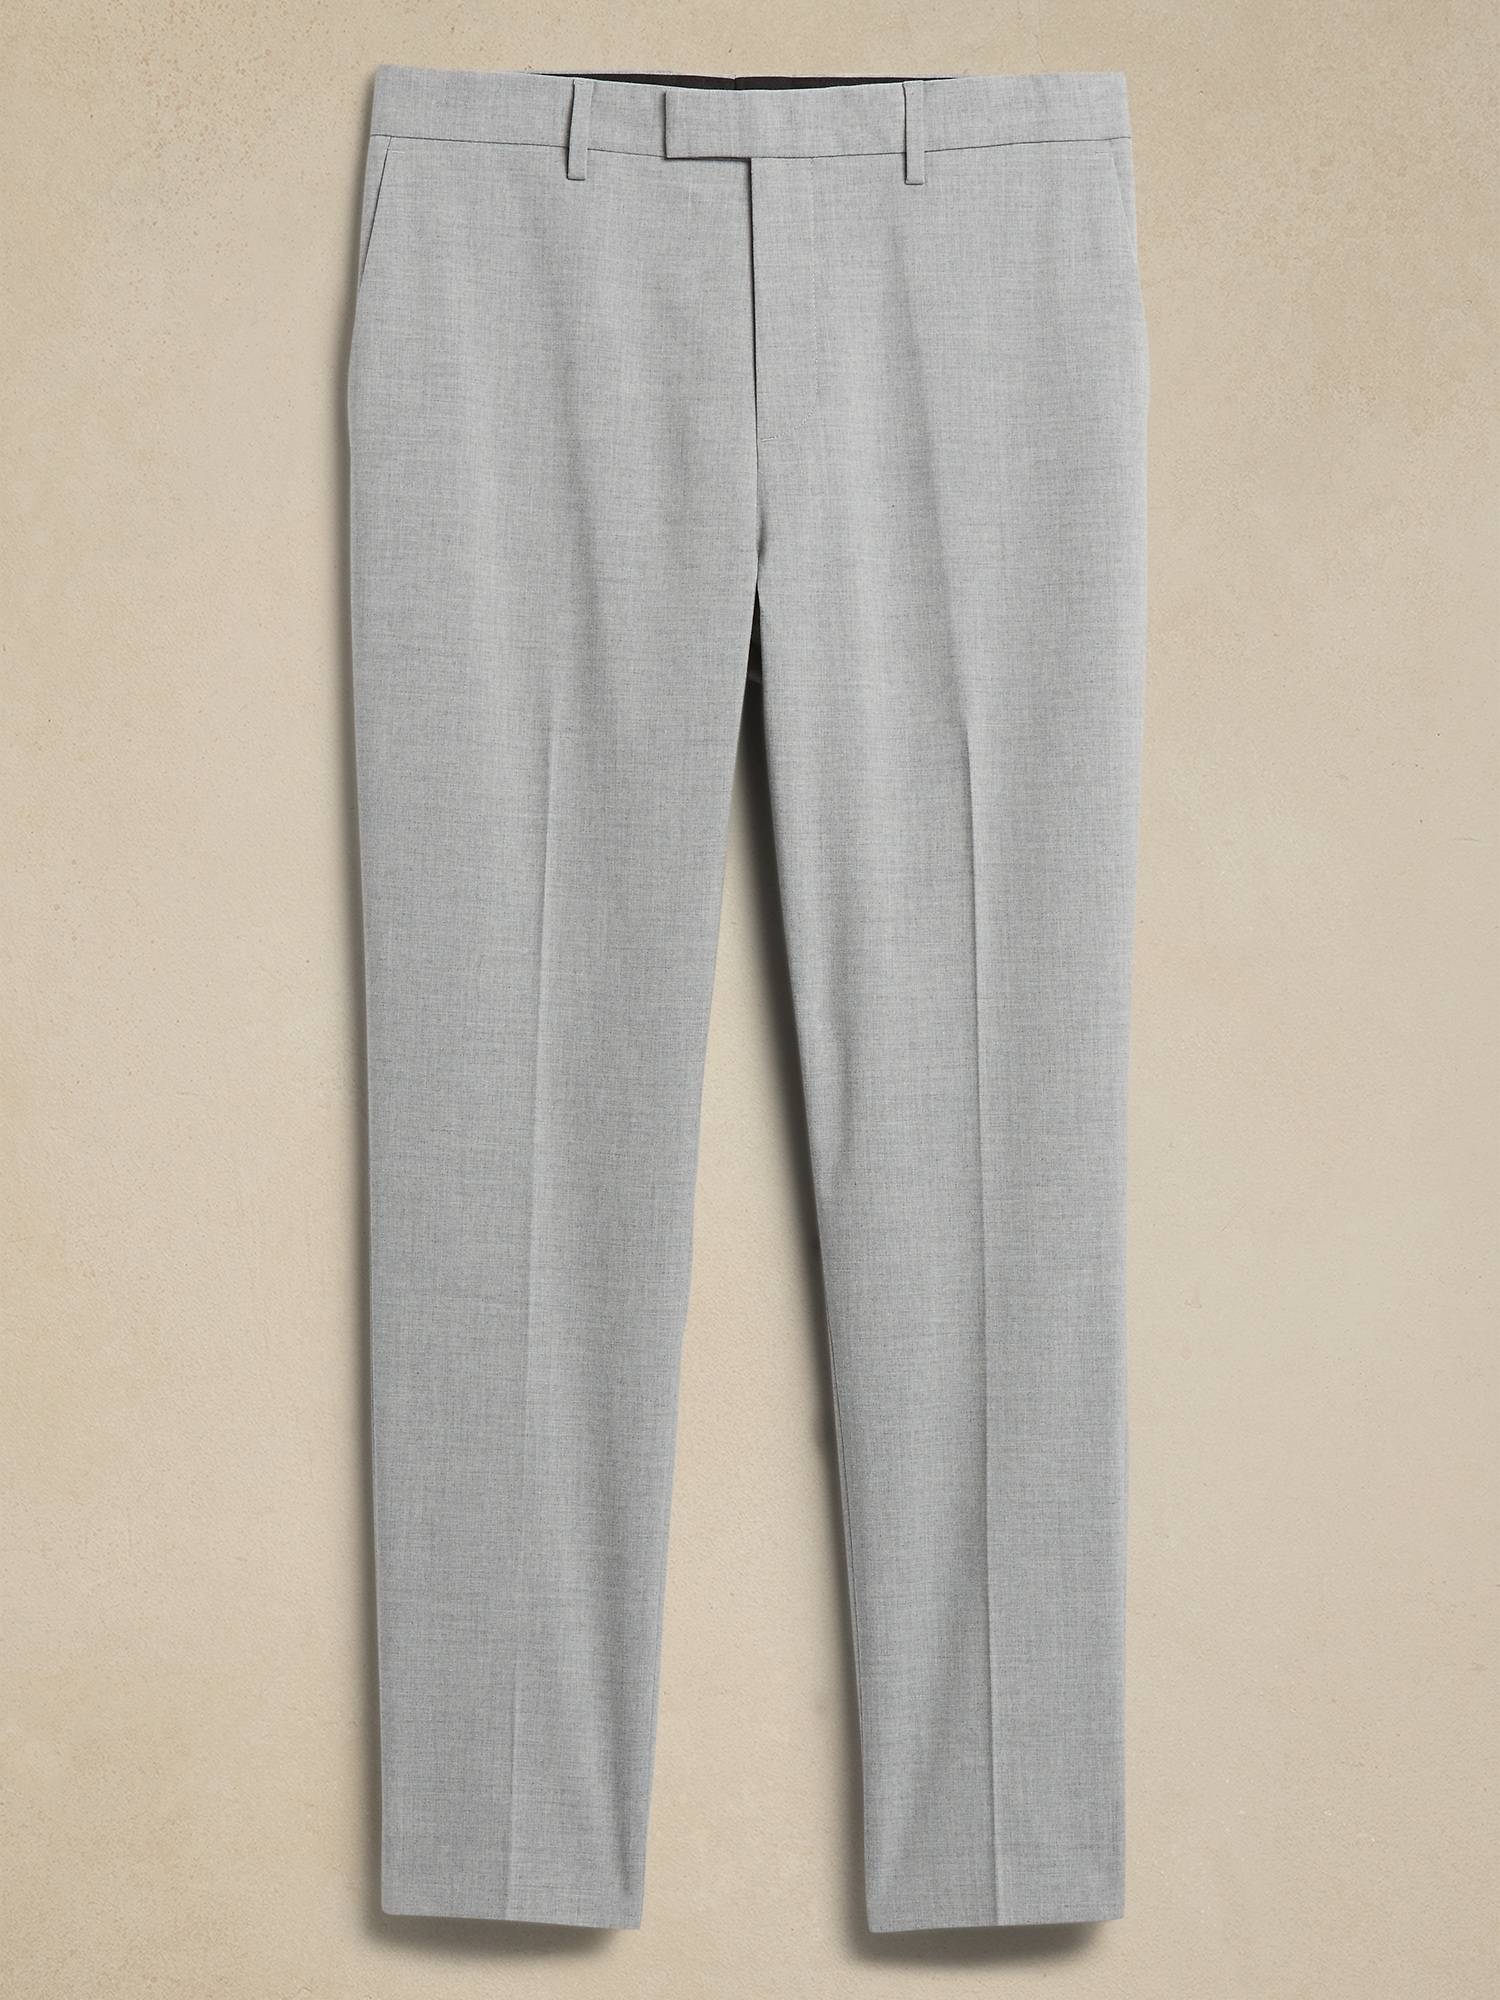 Slim fit light grey pants Stylish men's| Comfortable grey pants| Comfort  Slim Fit Light Grey Pants|